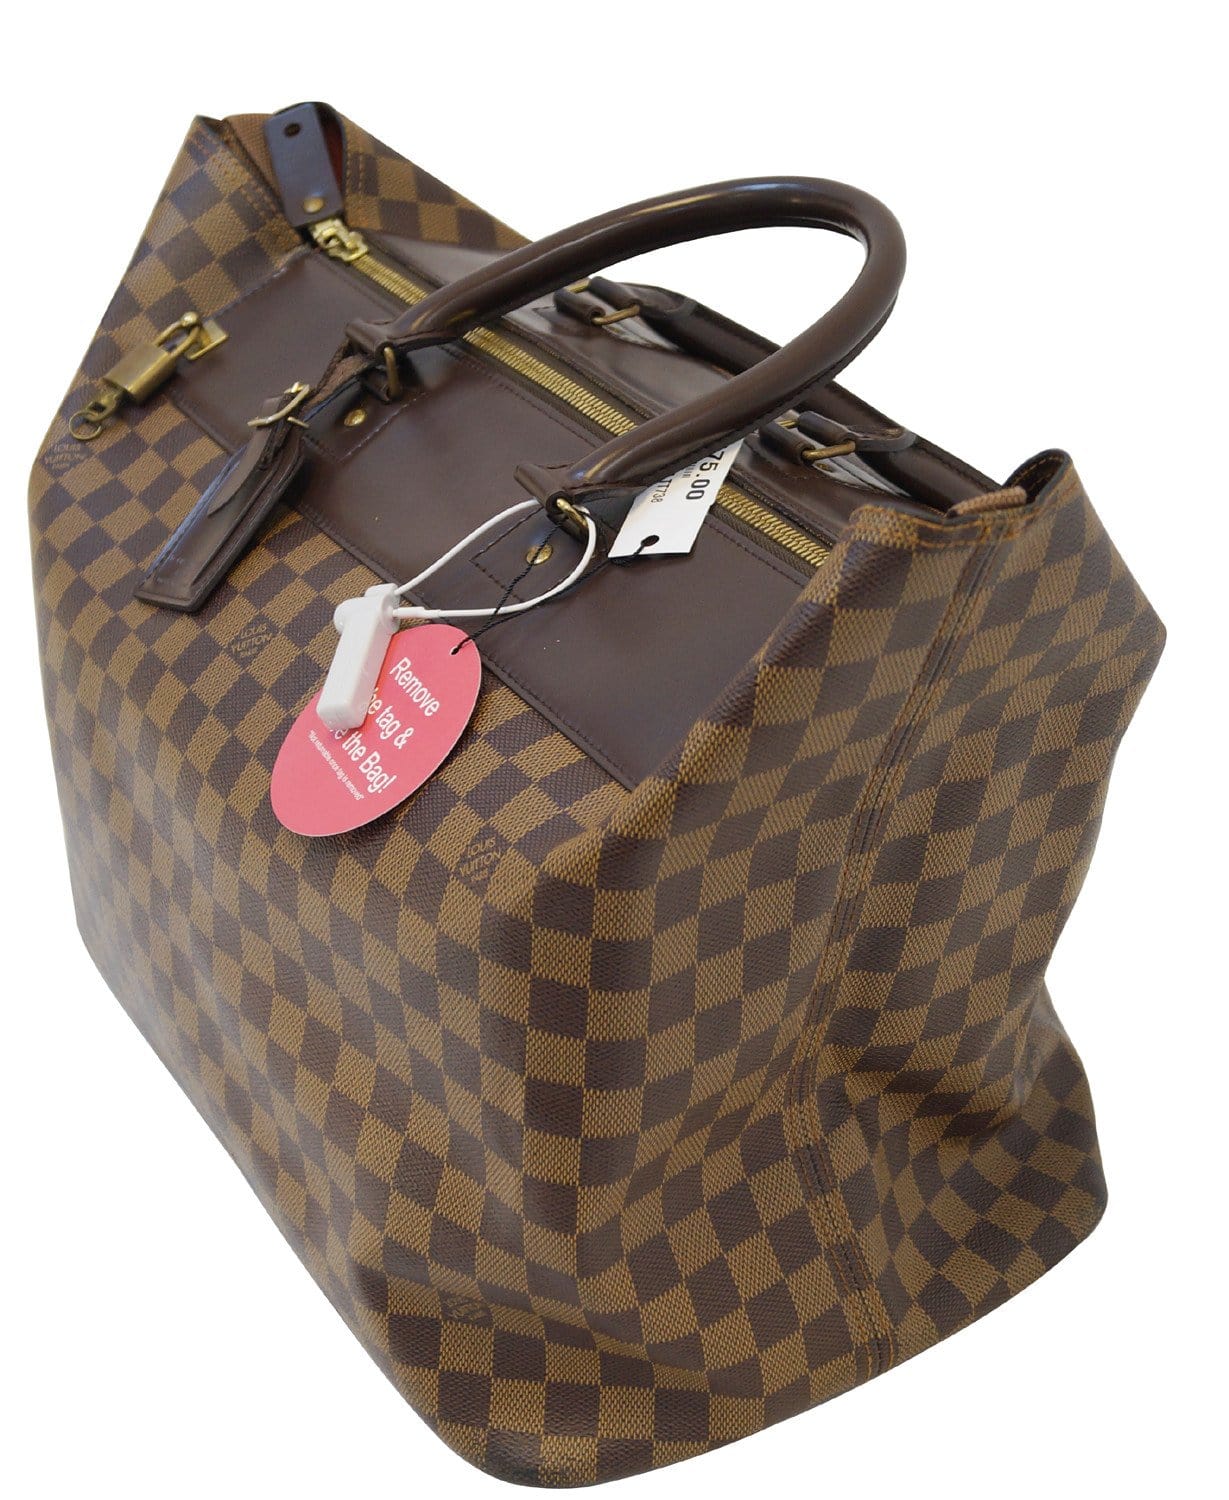 Louis Vuitton, Bags, Louis Vuitton Greenwich Nm Damier